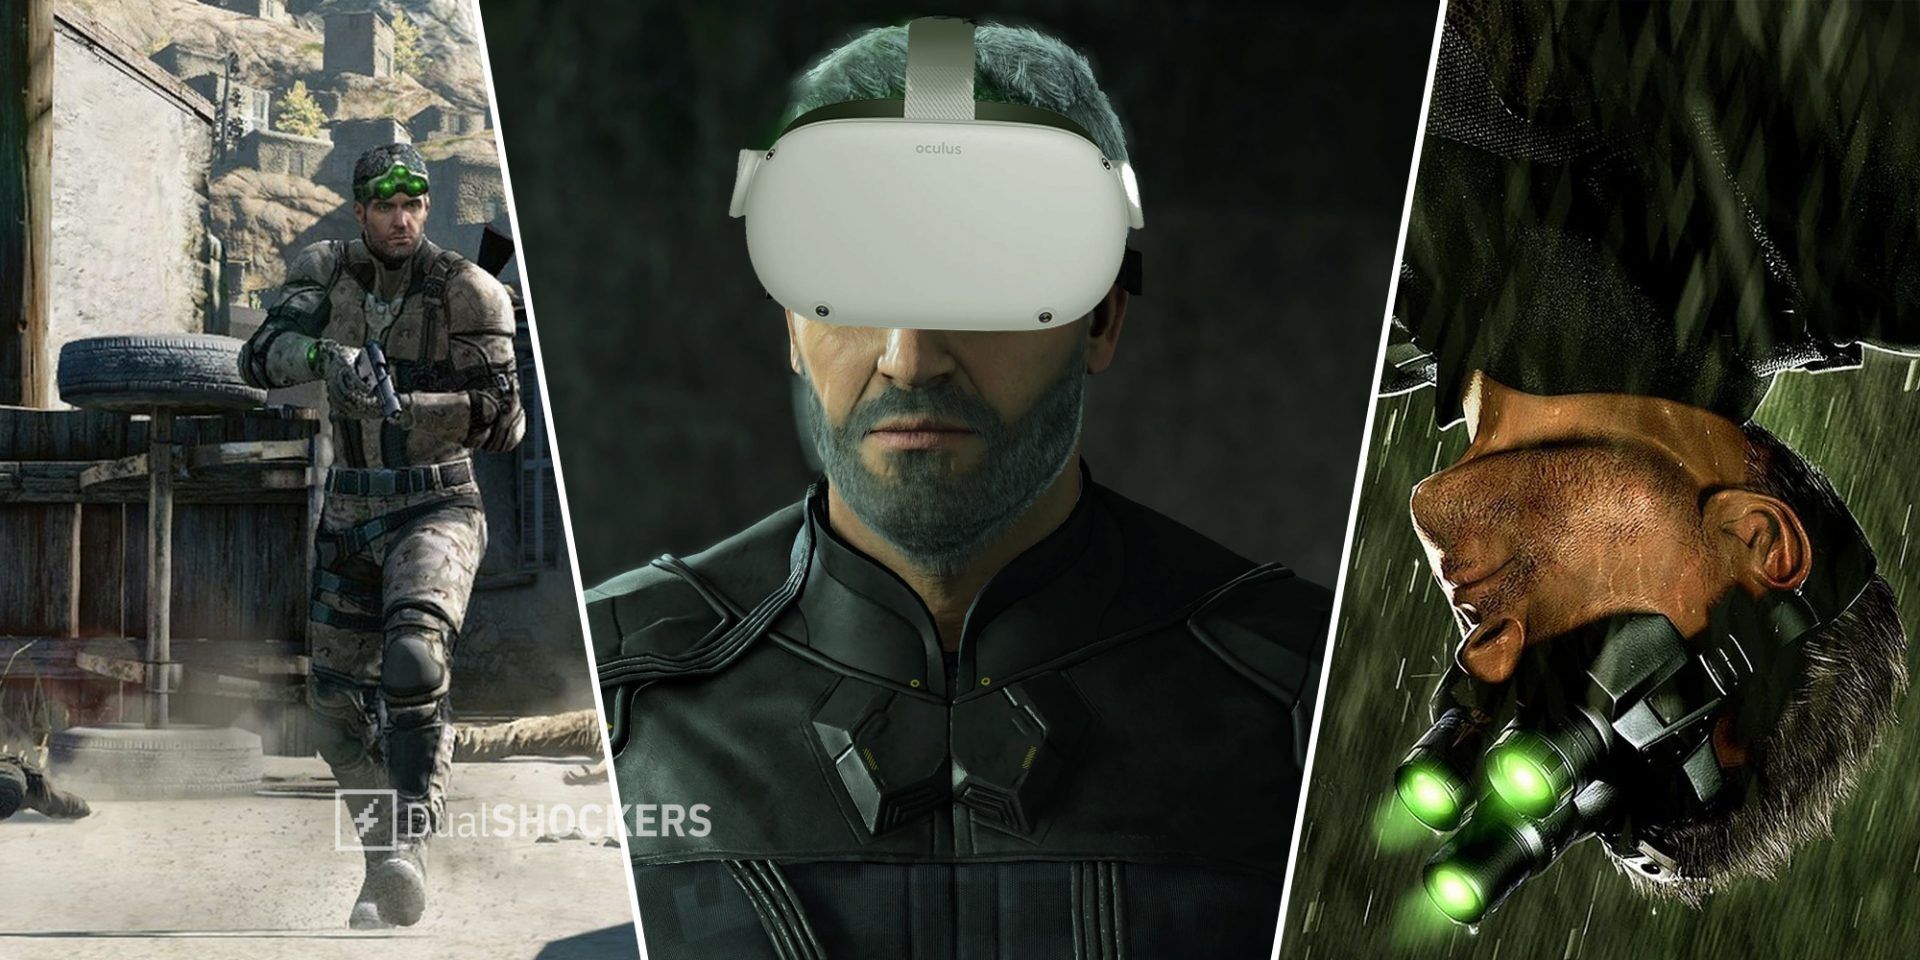 Ubisoft Cancels 'Splinter Cell VR', 'Ghost Recon Frontline' & 2